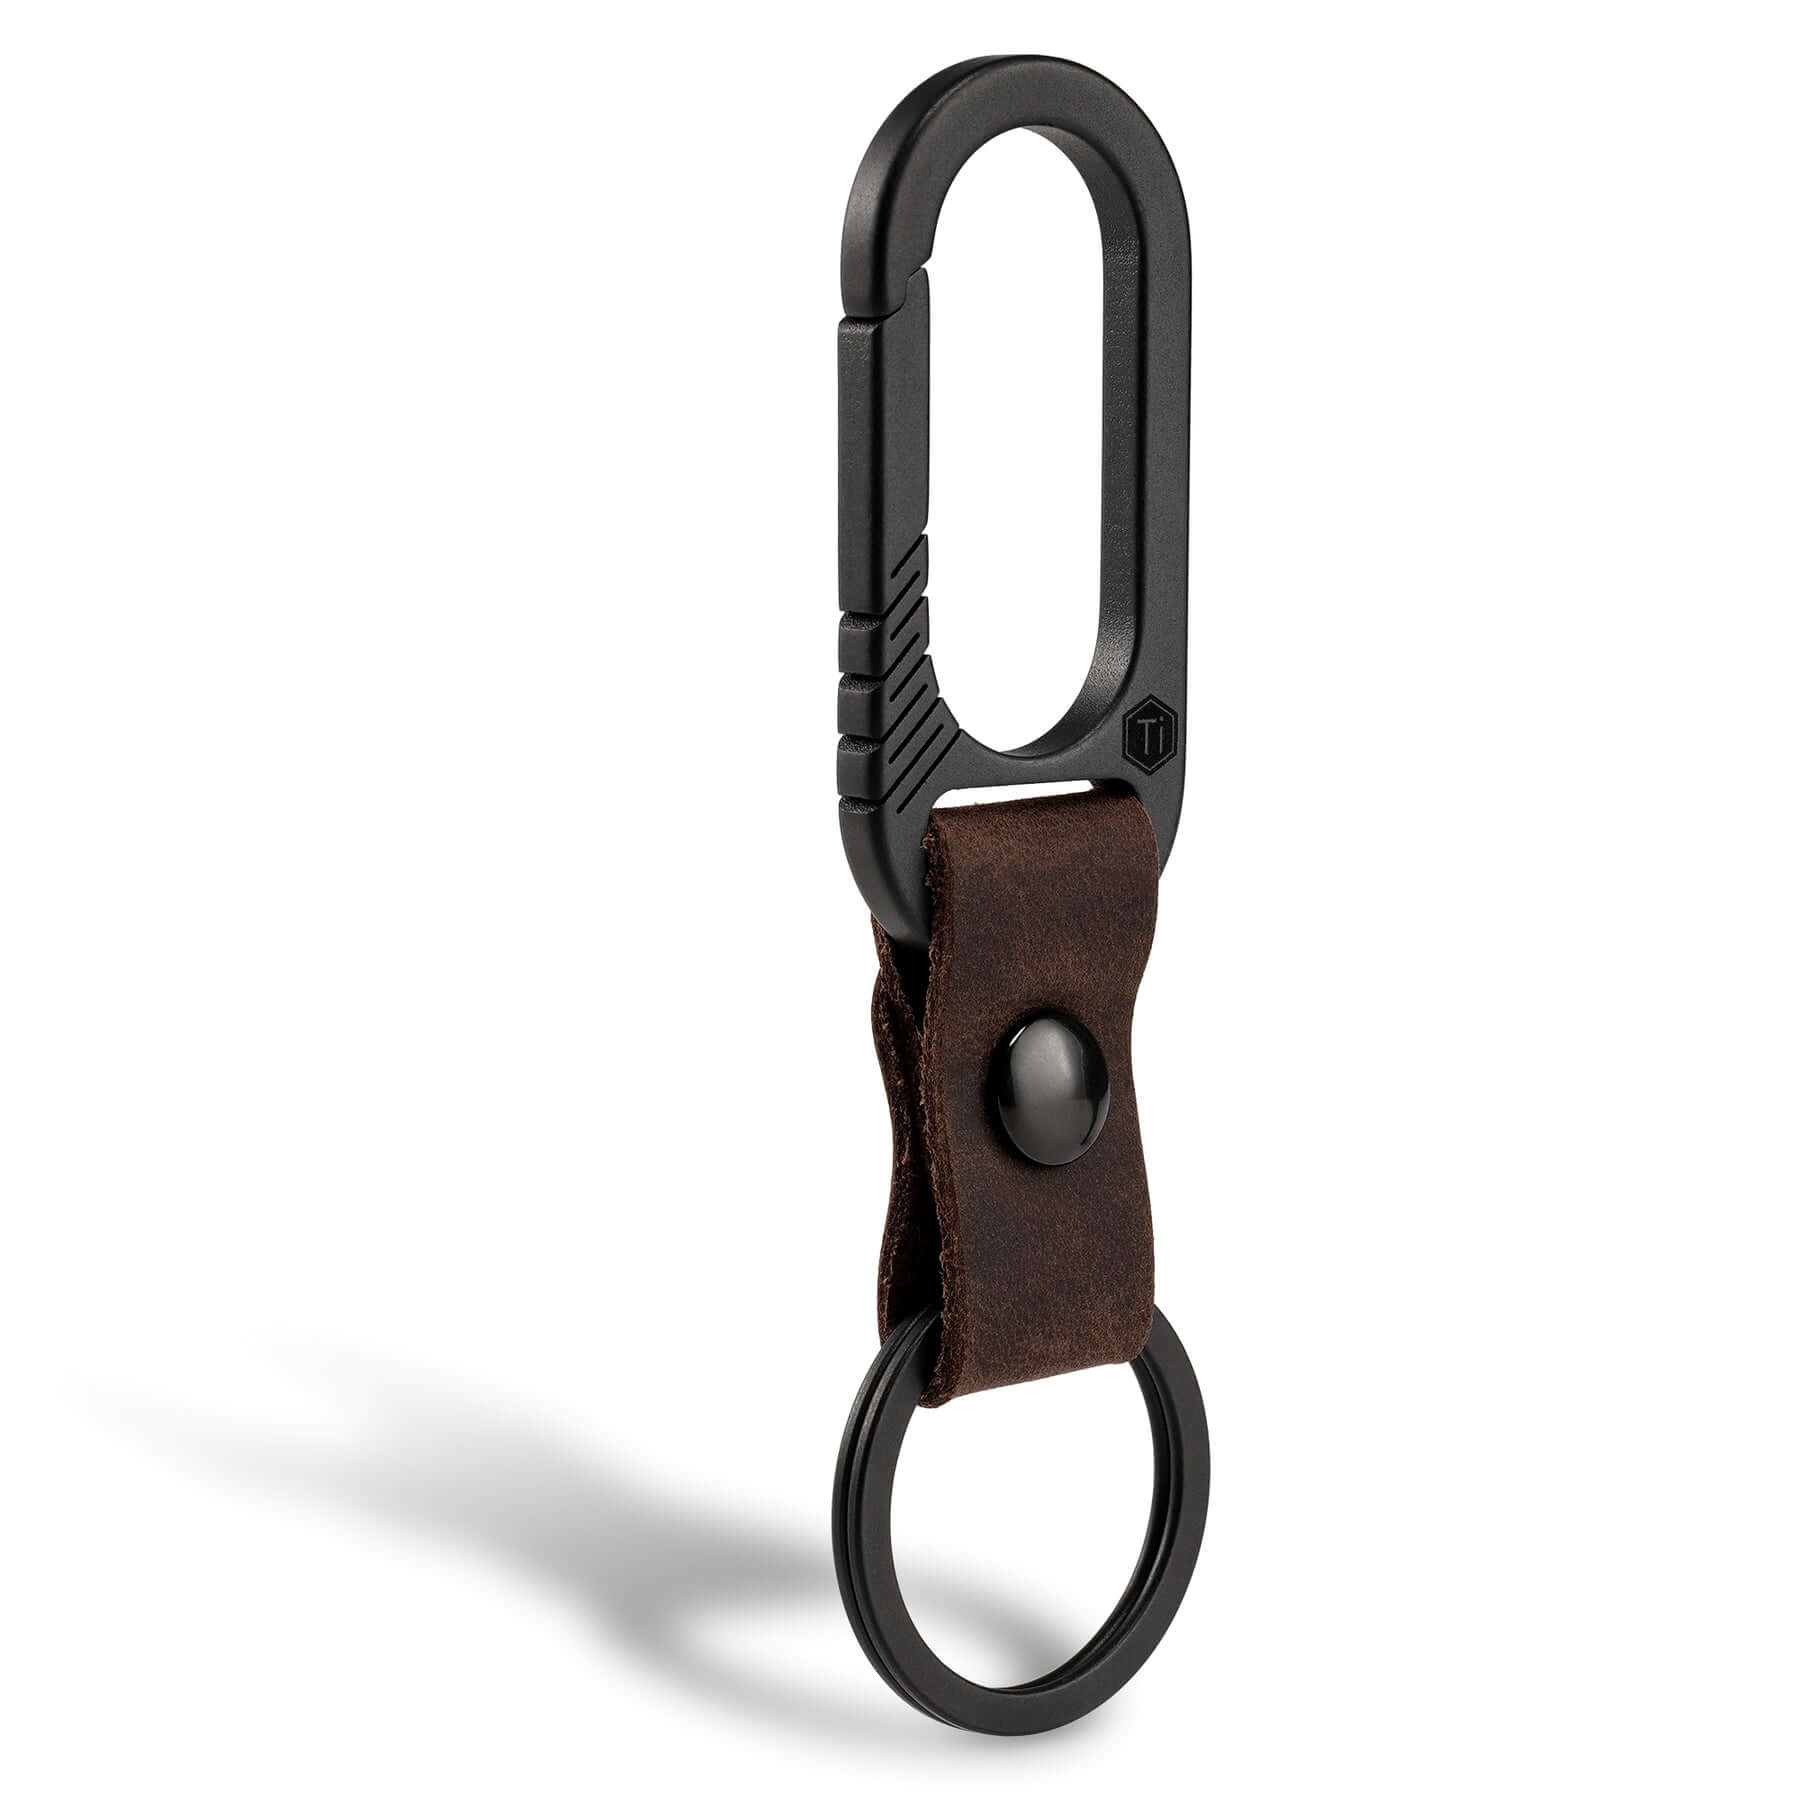 KeyUnity KM03 Titanium Keychain Clip Belt Loop Key Holder with